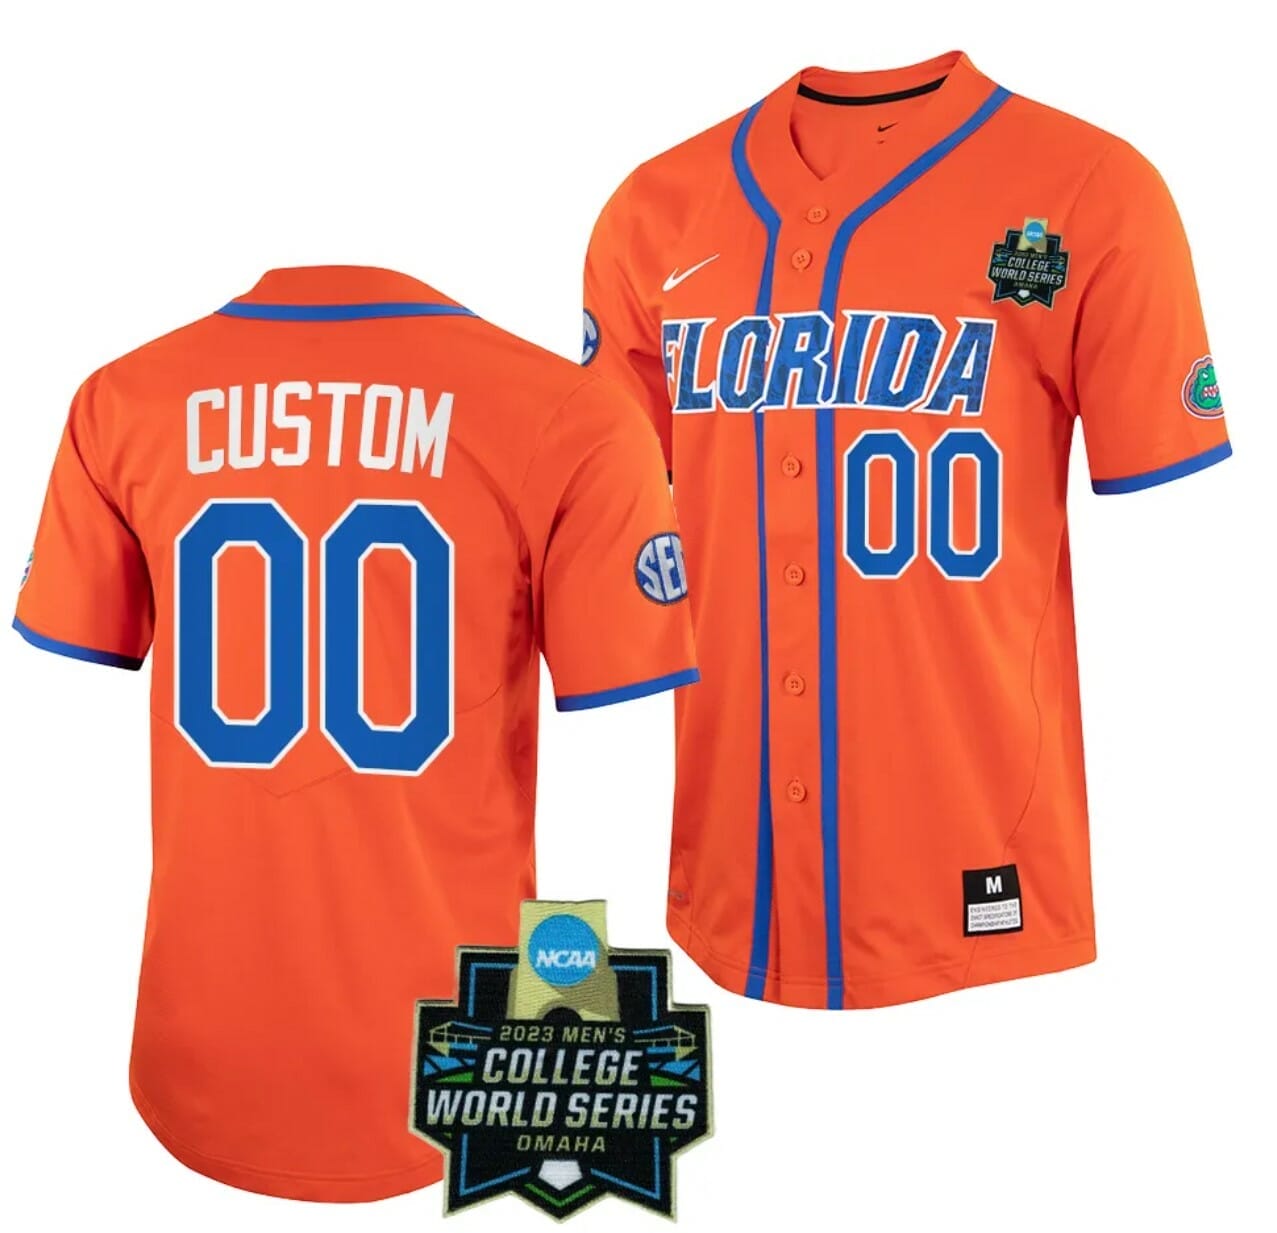 Available] Get New Custom Florida Gators Jersey Orange WS